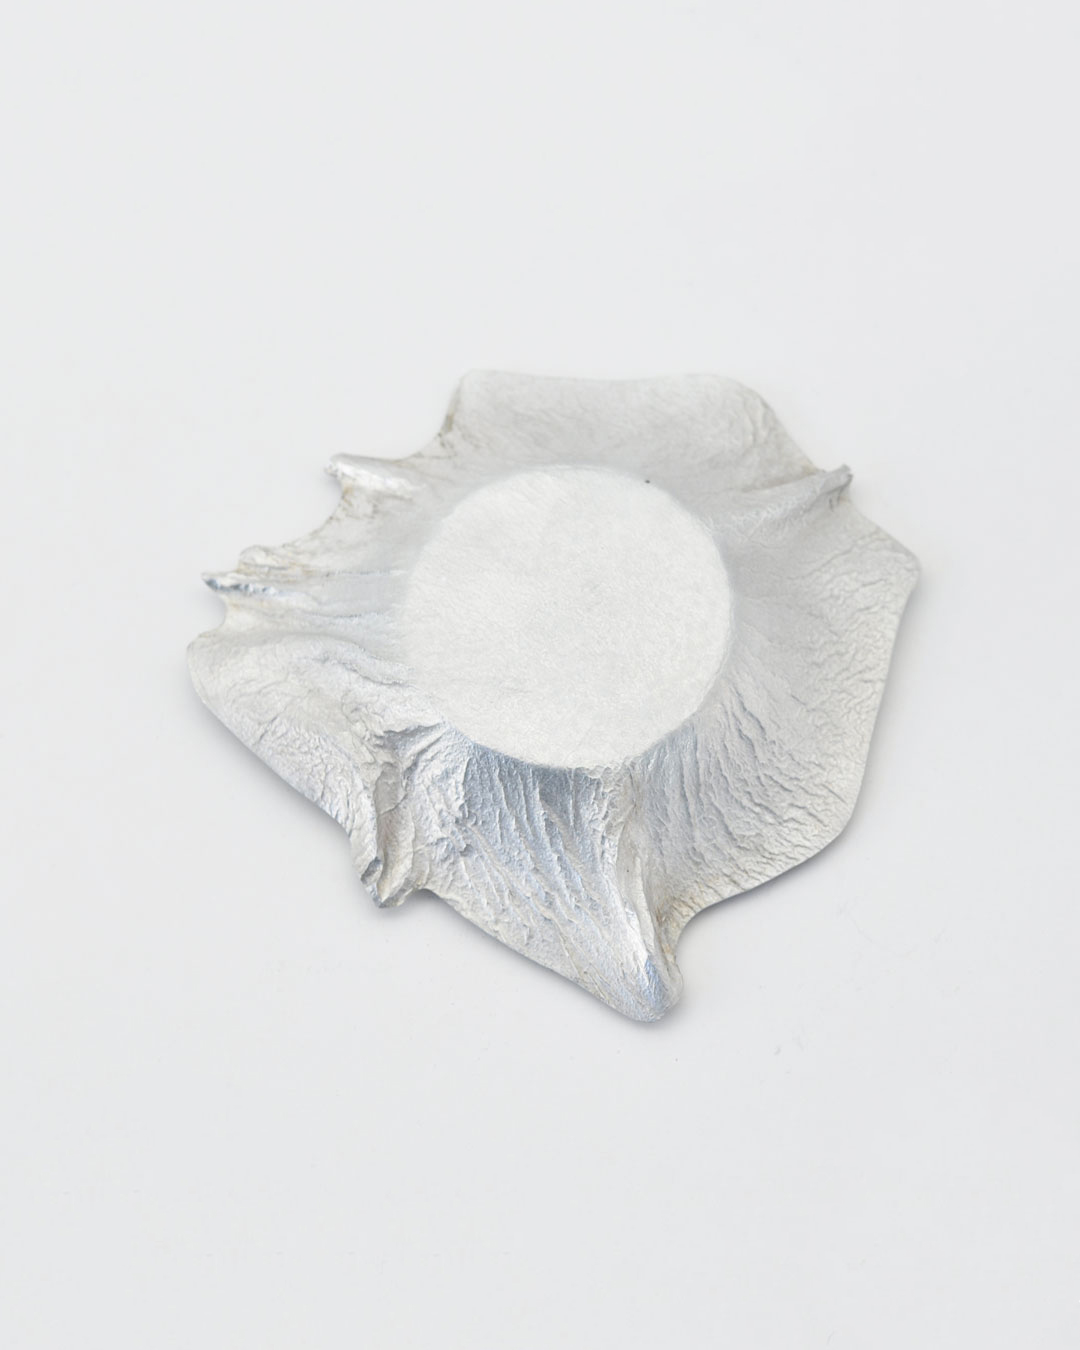 Anders Ljungberg, Intension Large #1, 2019, brooch; aluminium, steel, 112 x 114 x 20 mm, €550